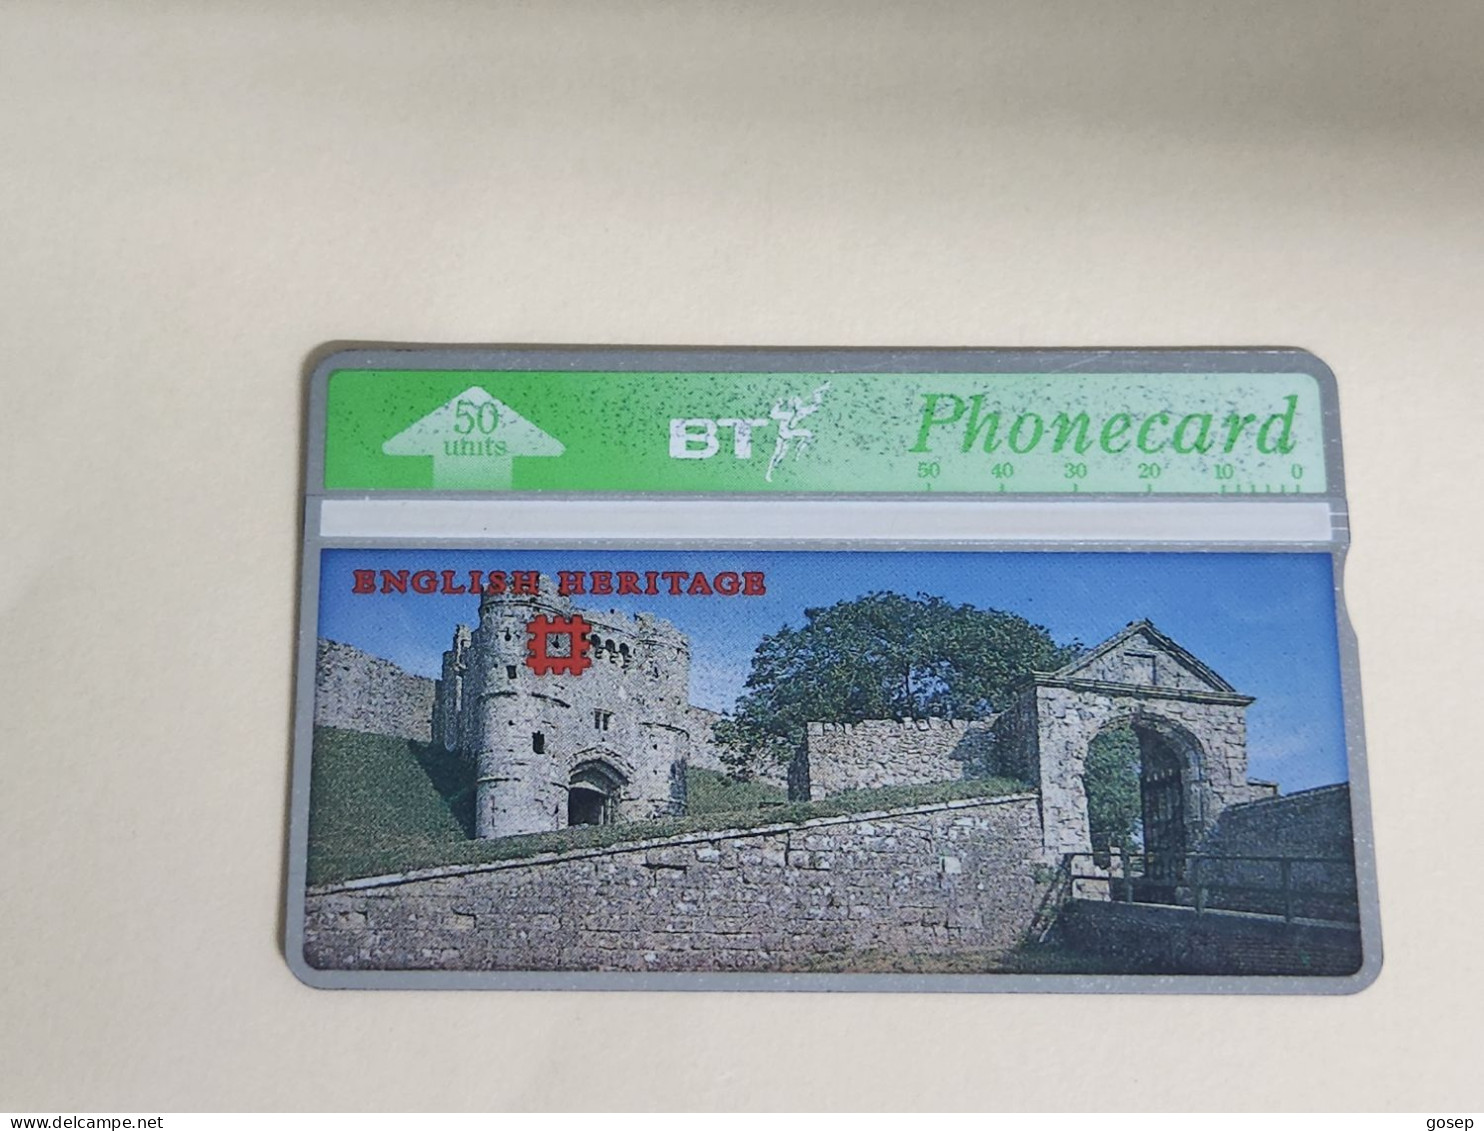 United Kingdom-(BTA105)-HERITAGE-carisbrooke Castle-(171)(50units)(508E91539)price Cataloge8.00£-mint+1card Prepiad Free - BT Publicitaire Uitgaven